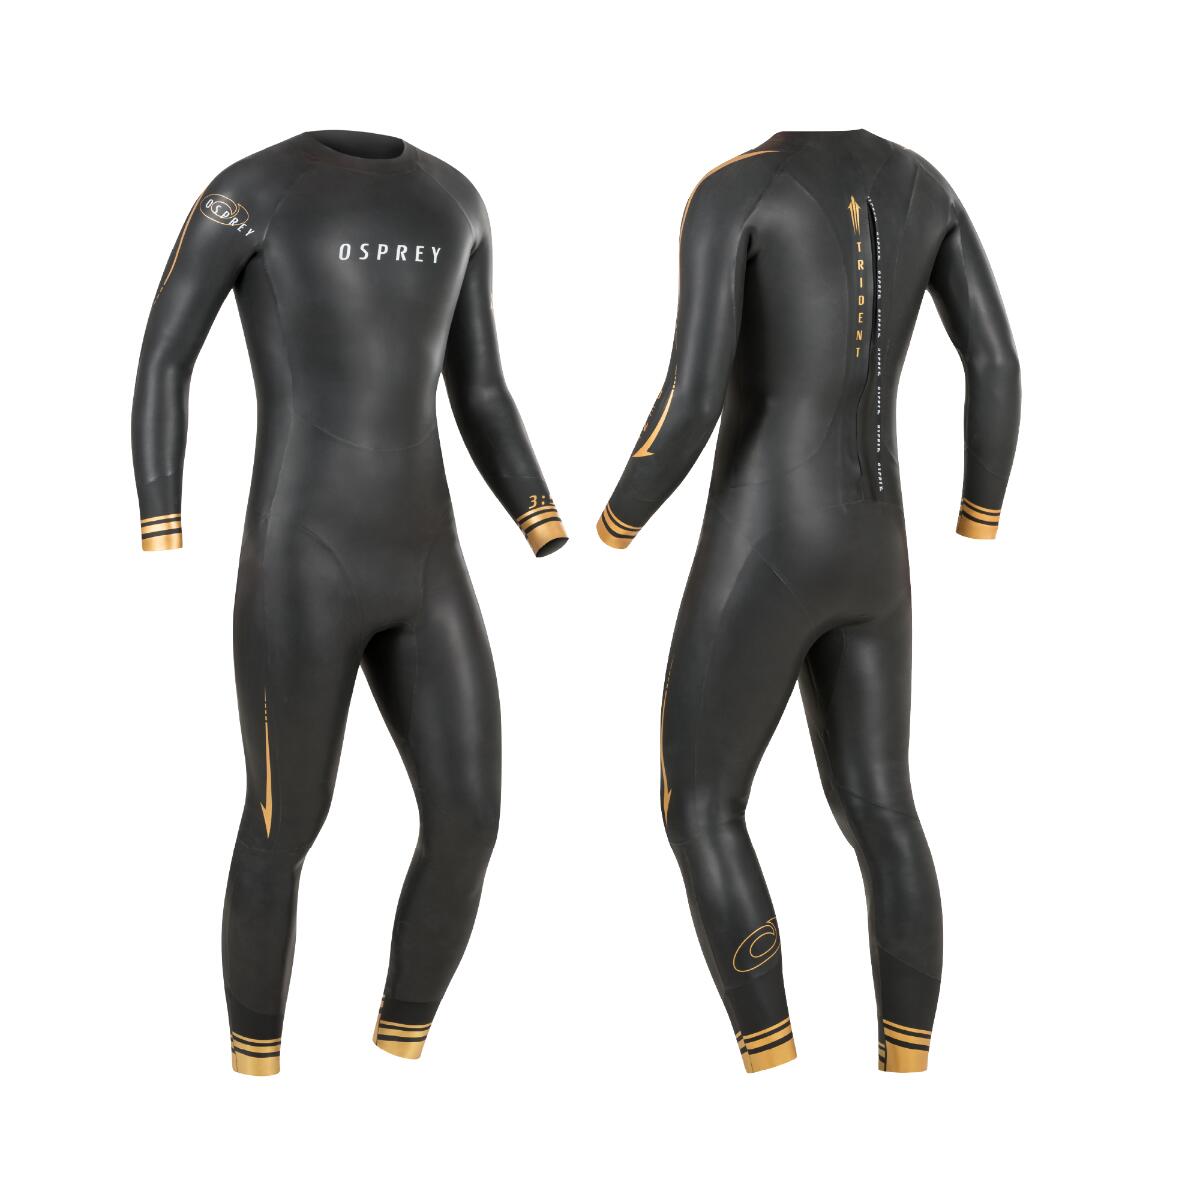 OSPREY ACTION SPORTS Osprey Mens Trident Tri-Suit 4mm Wetsuit | Triathlon Wetsuit, Black